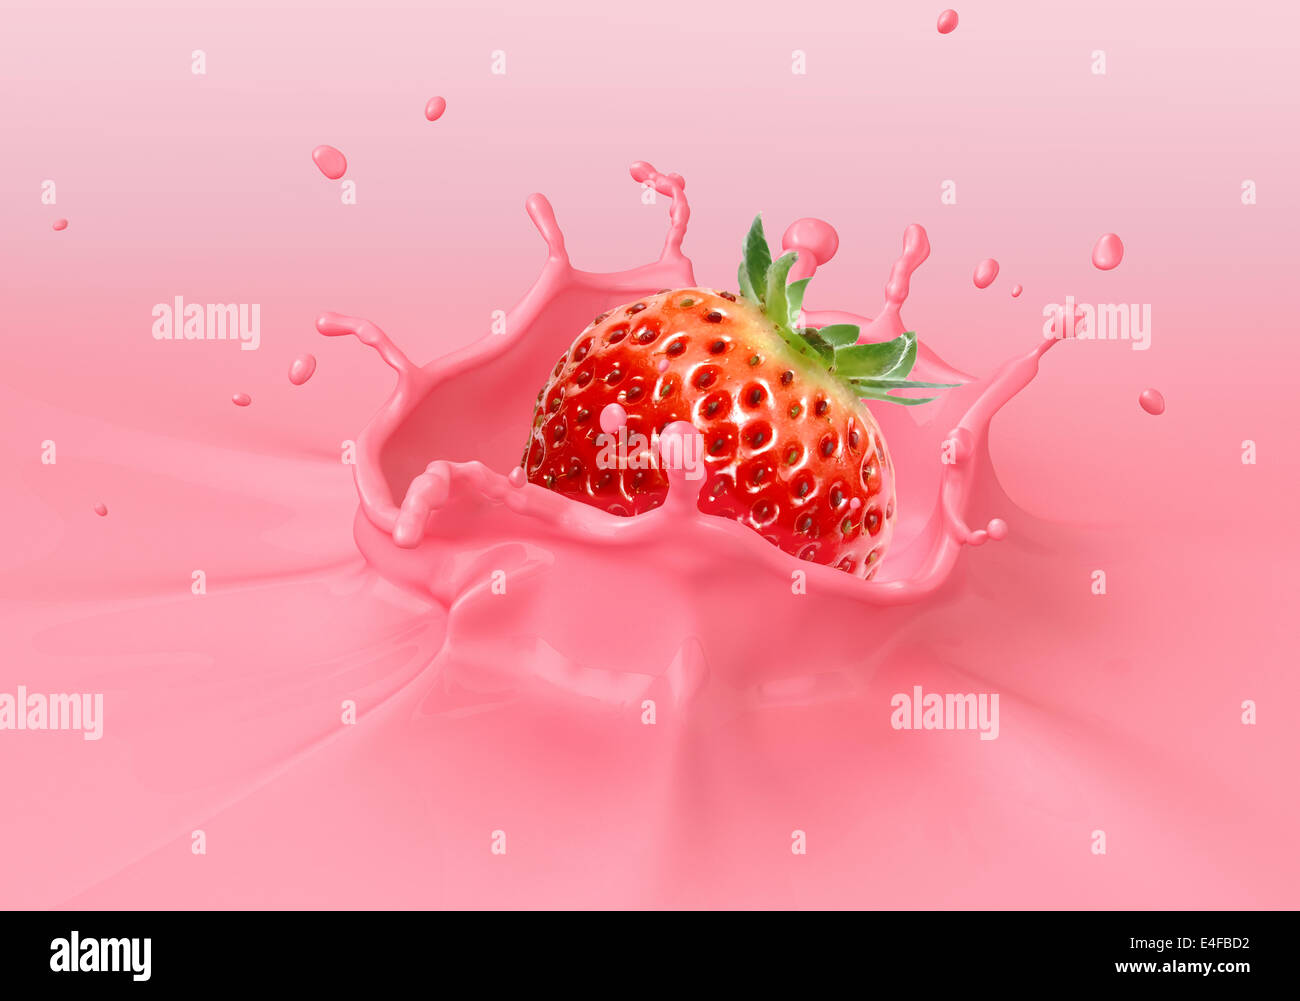 Strawberry falling into pink creamy liquid splashing. Close up view. Stock Photo